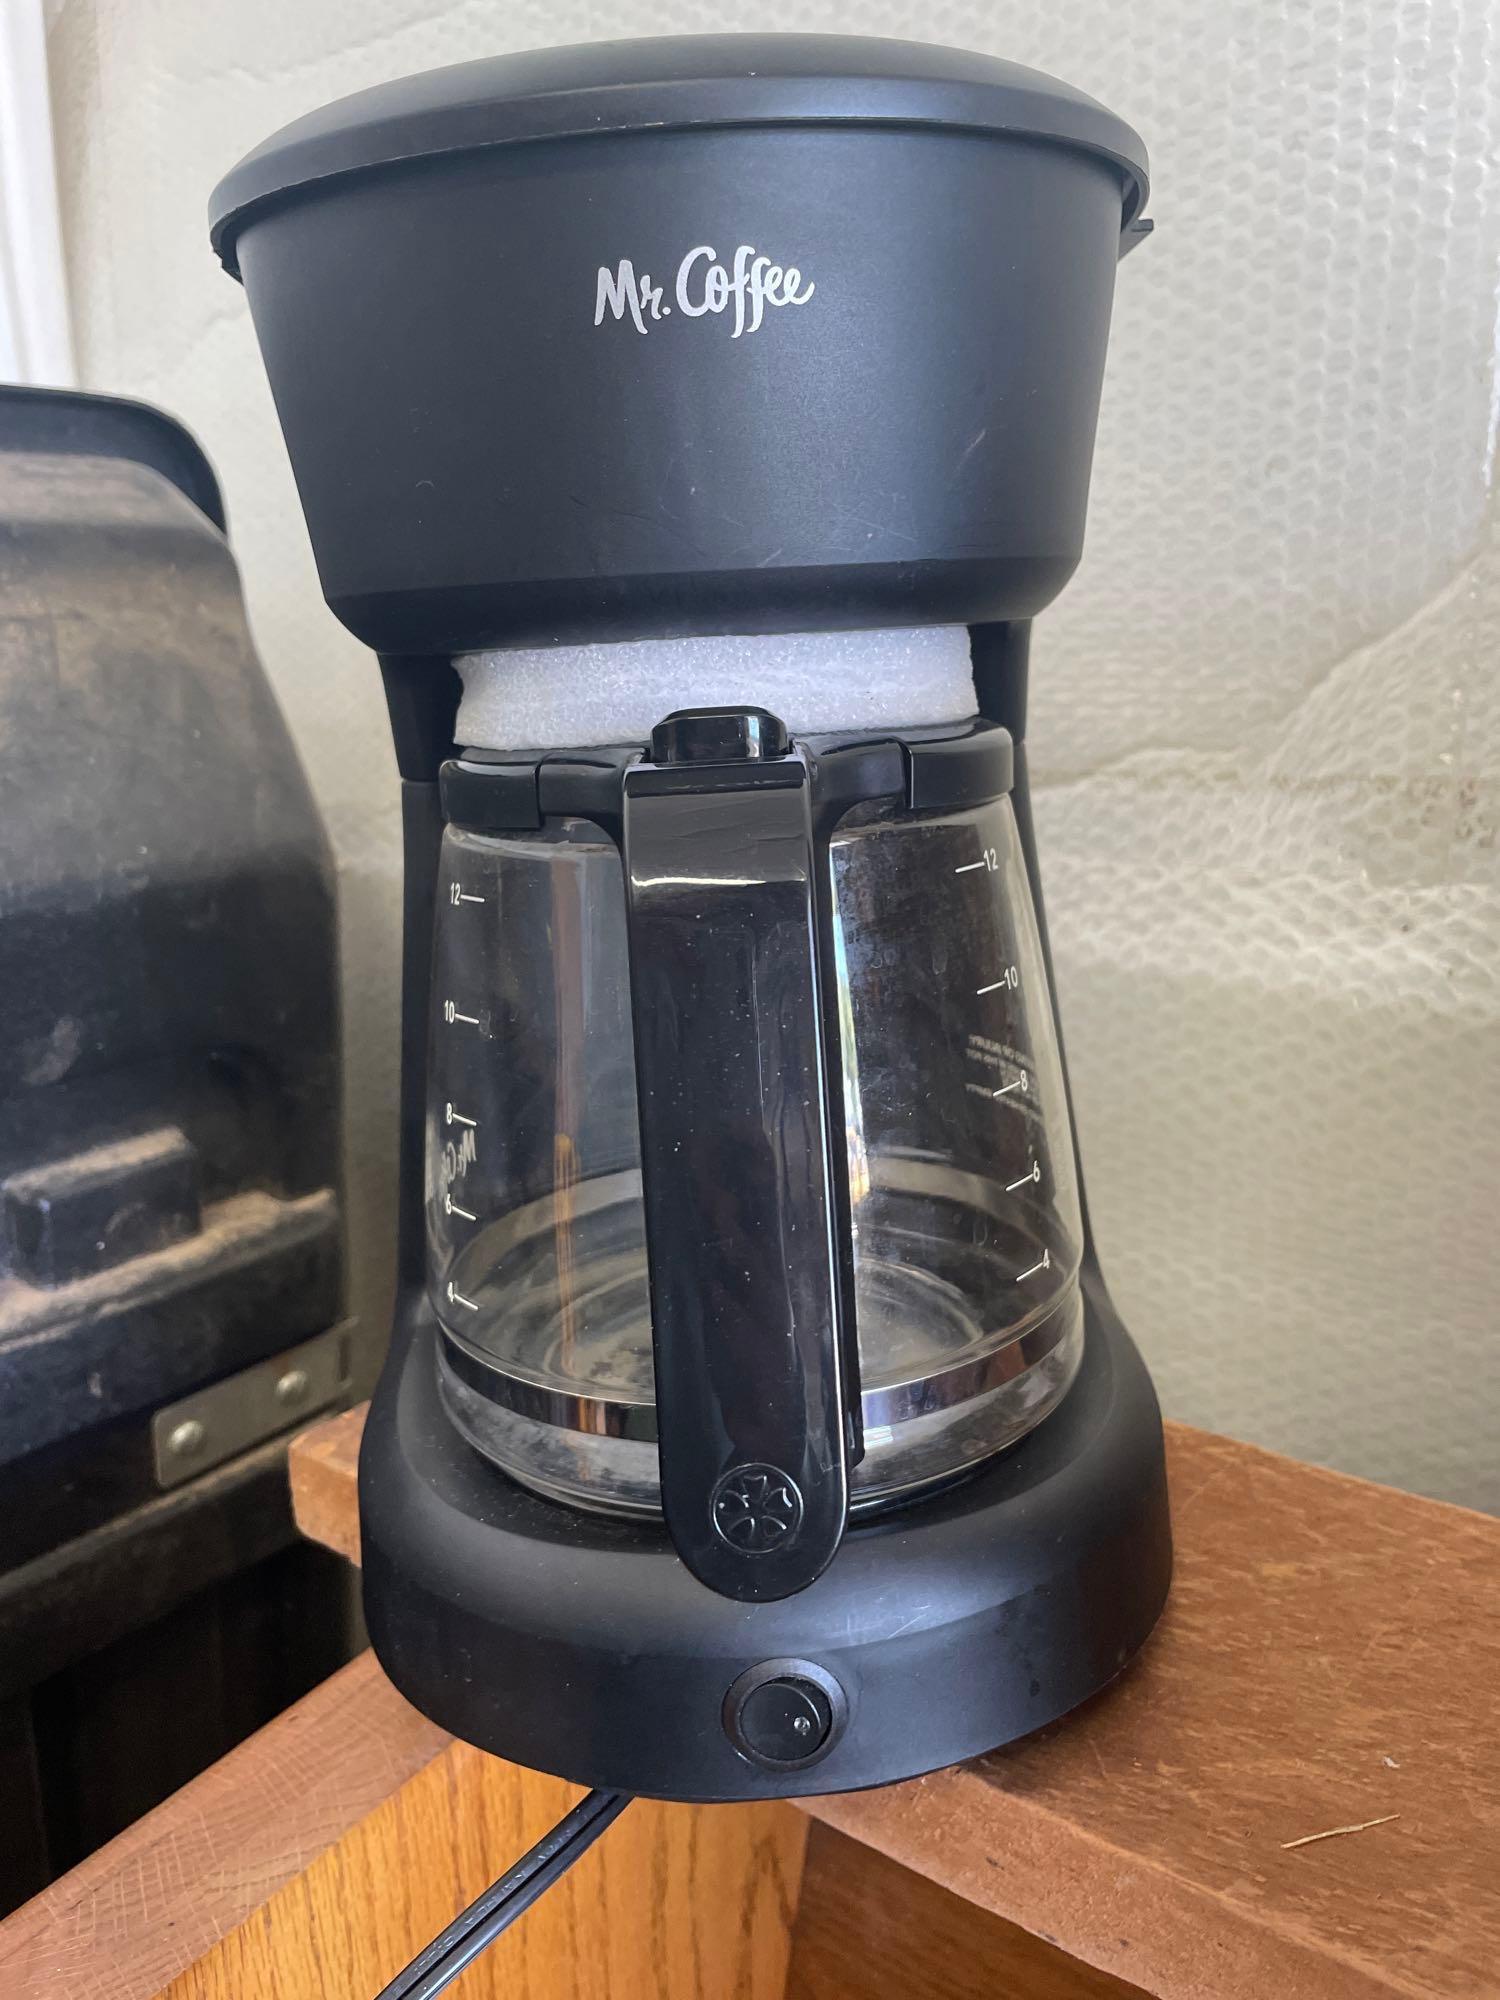 mr. coffee coffee maker